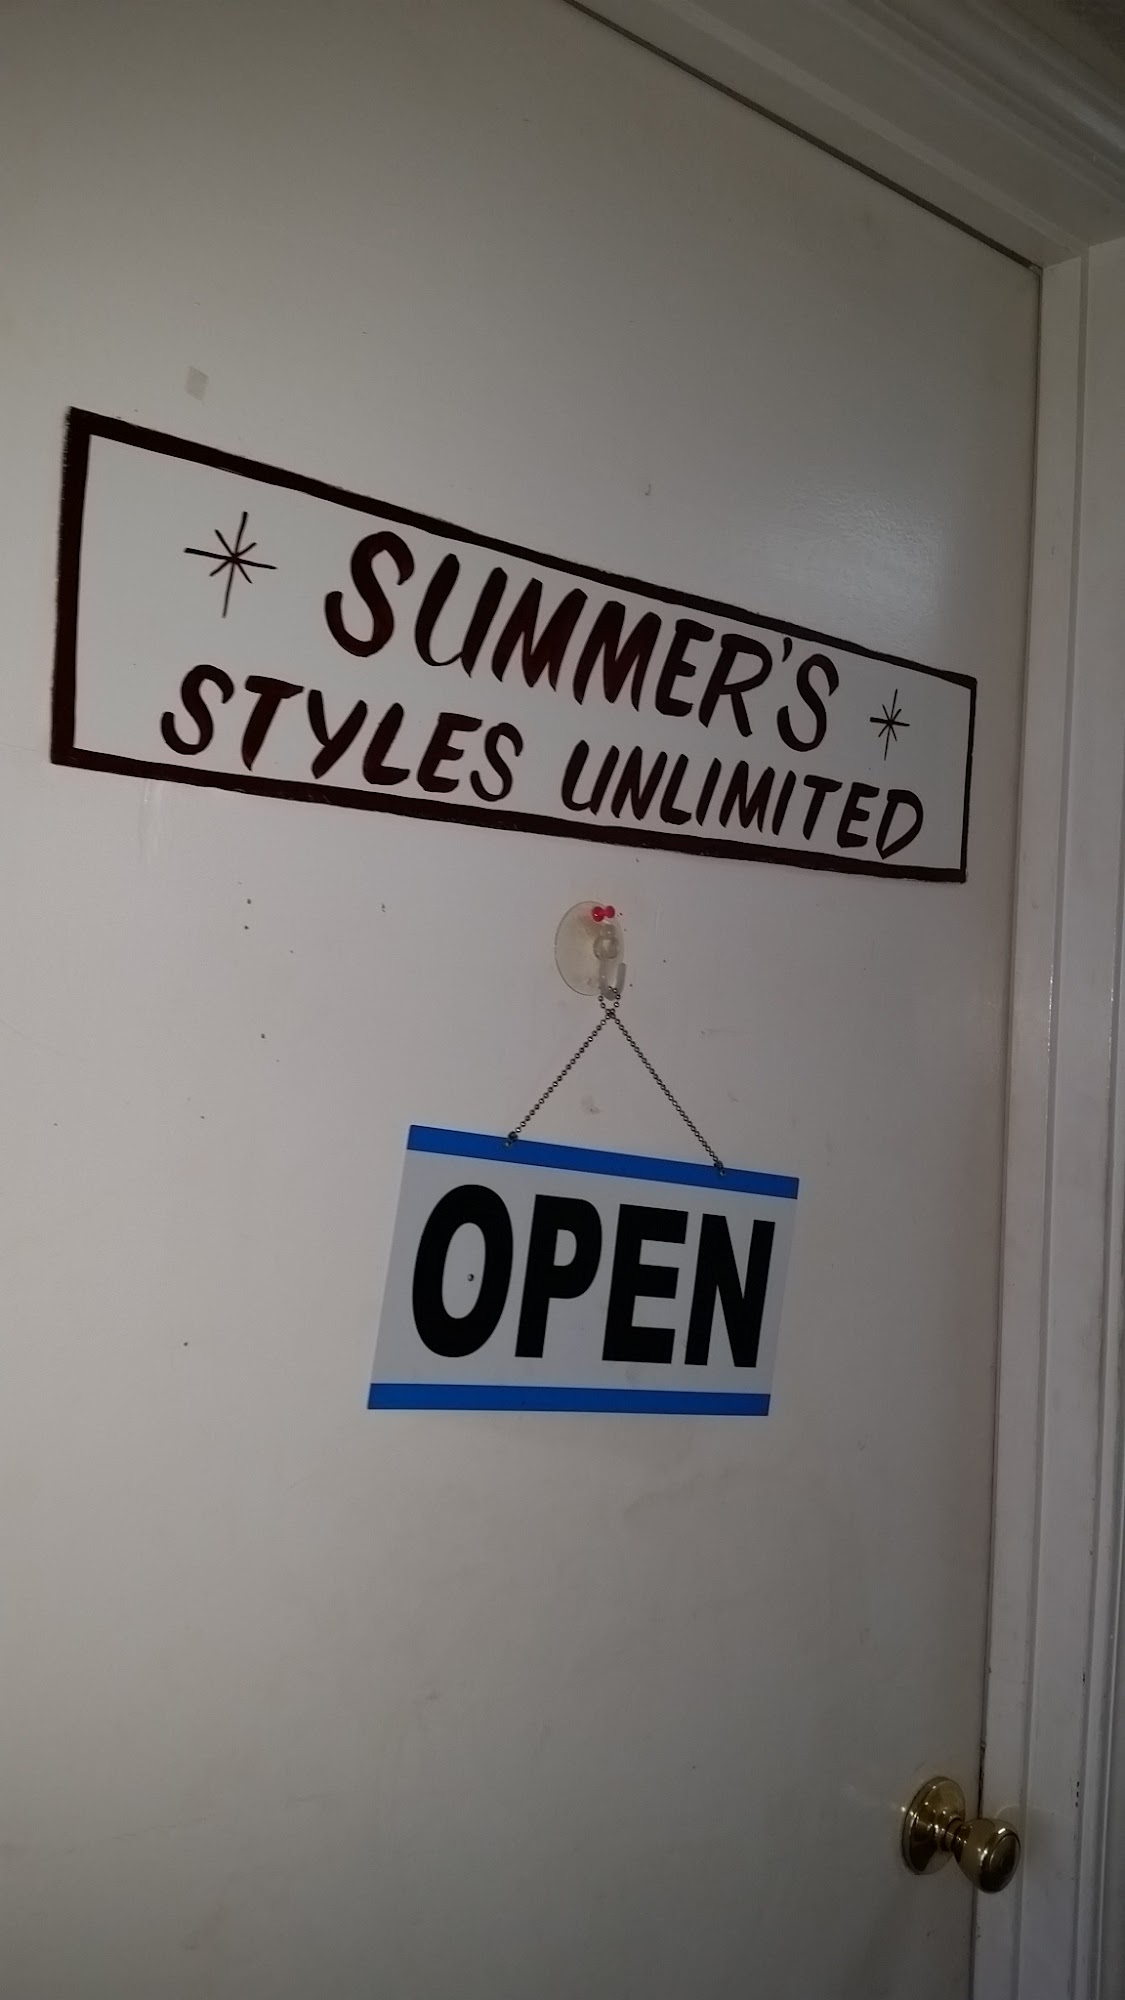 Summer's Styles Unlimited 137 W Seminary St, Owenton Kentucky 40359